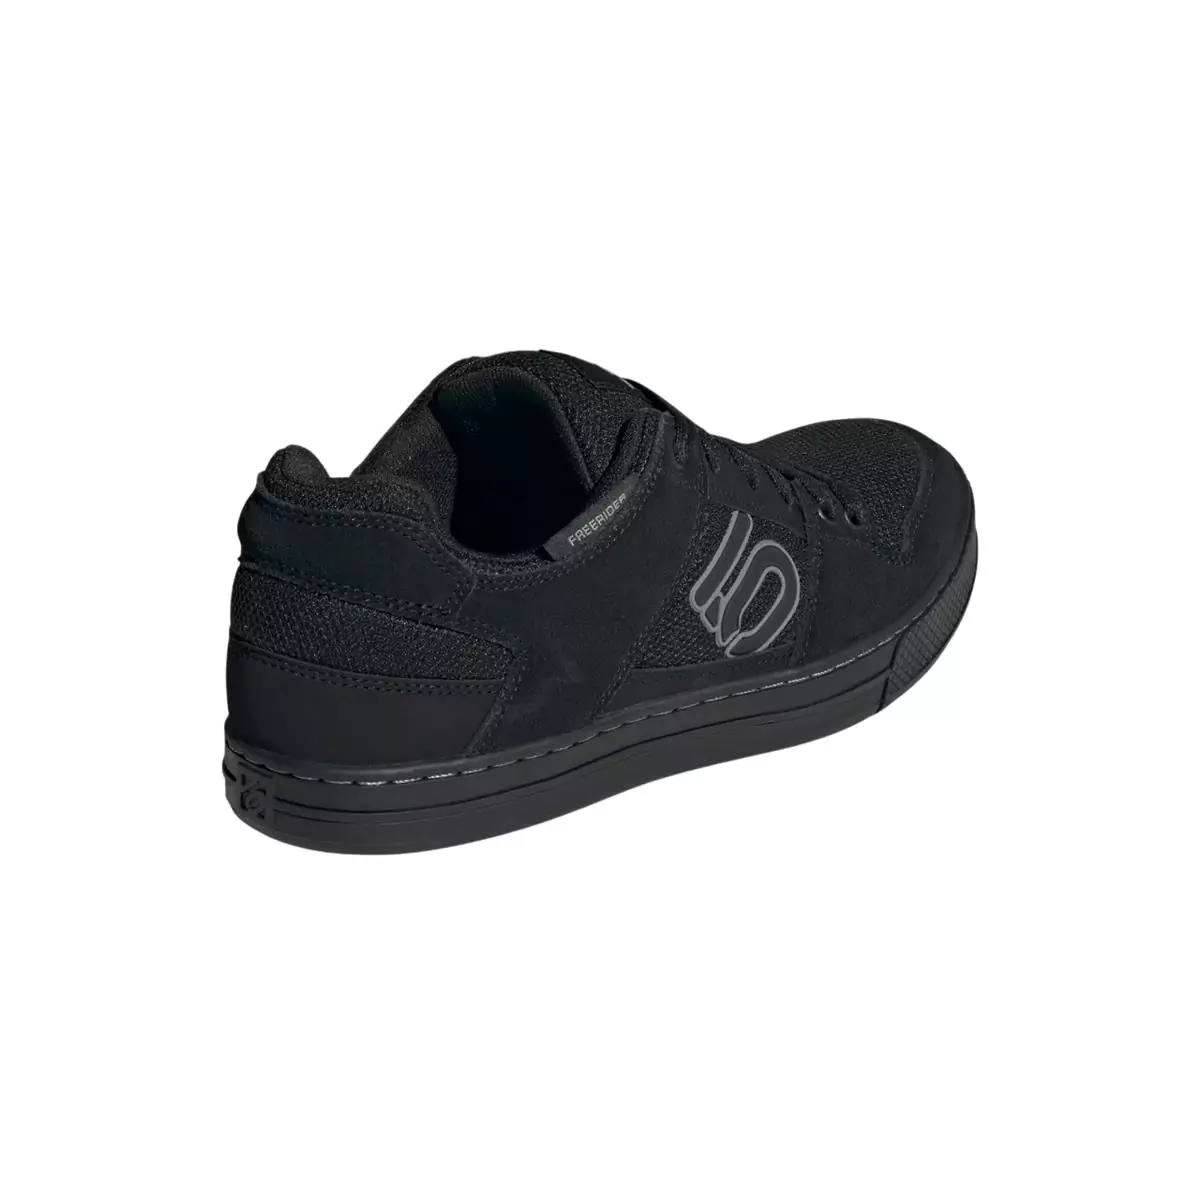 MTB Shoes Flat Freerider Black Size 45 #5